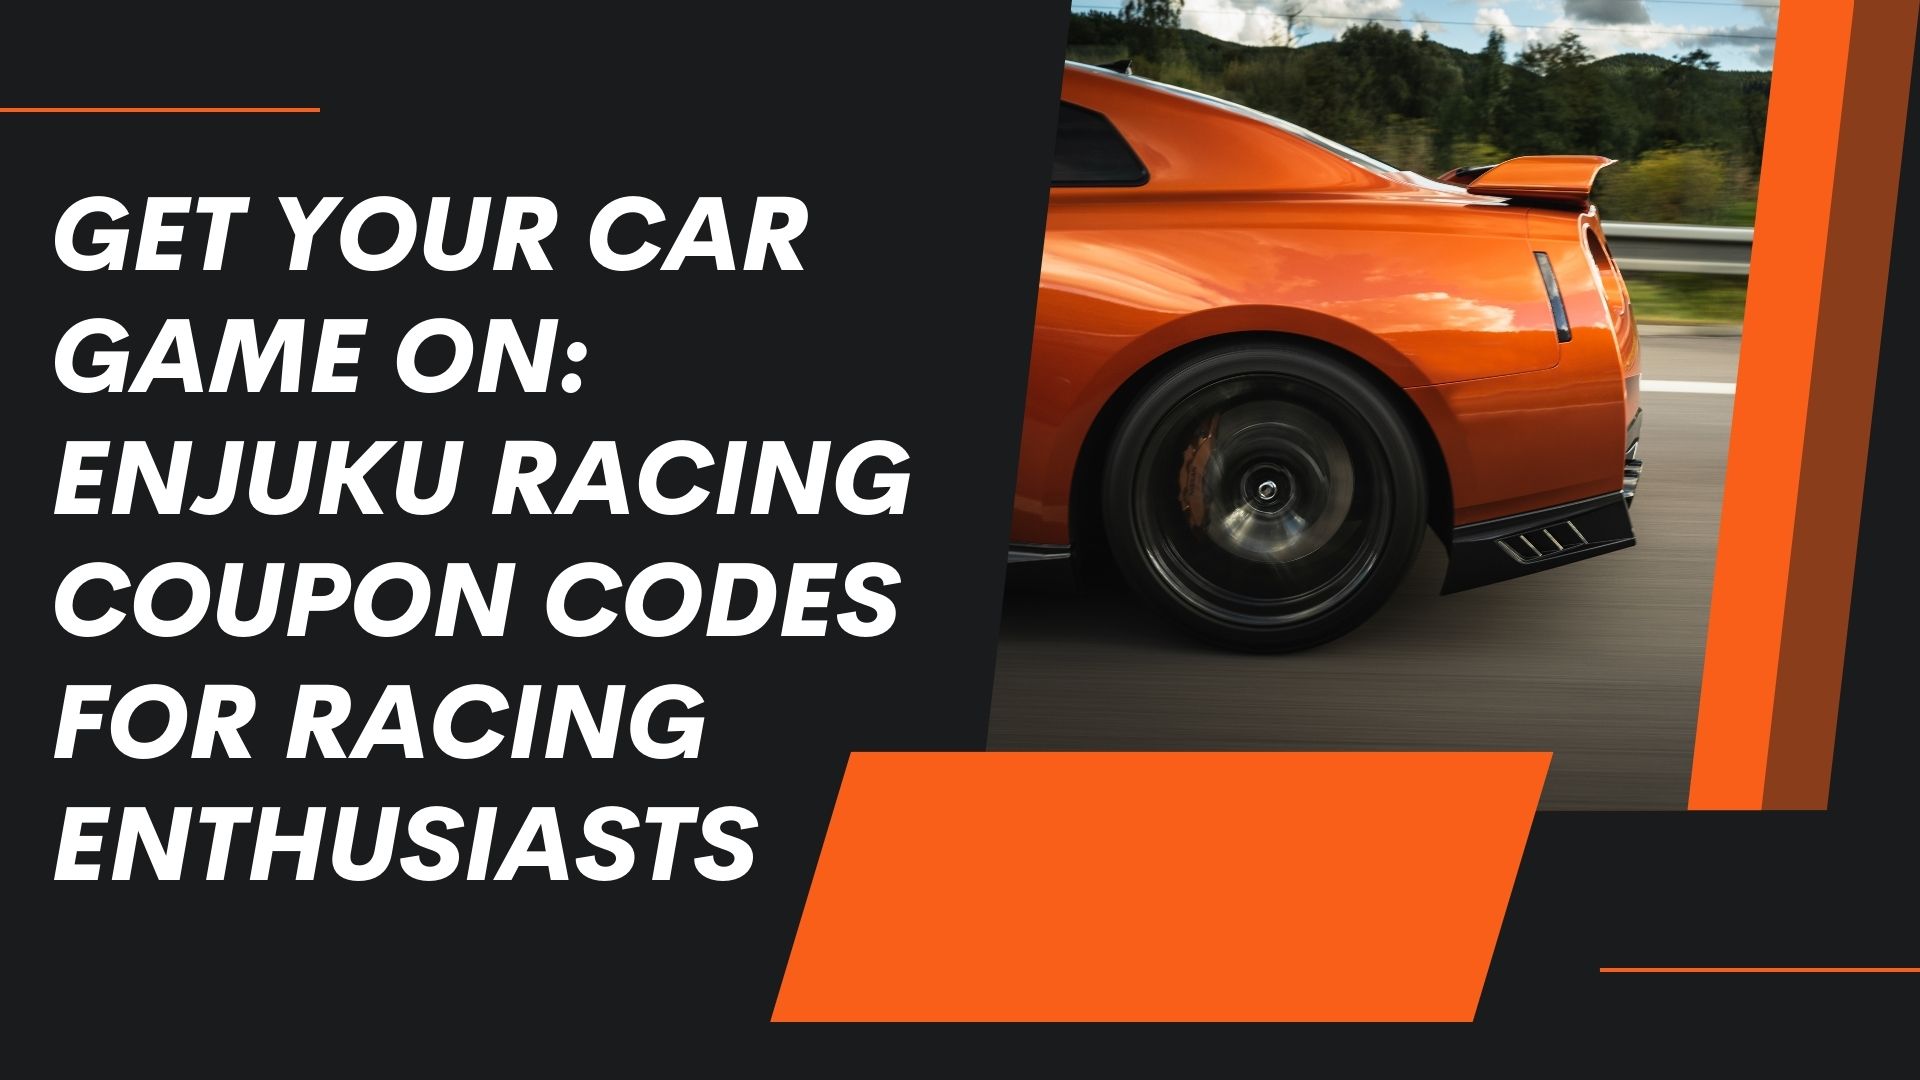 Enjuku Racing Coupon Codes